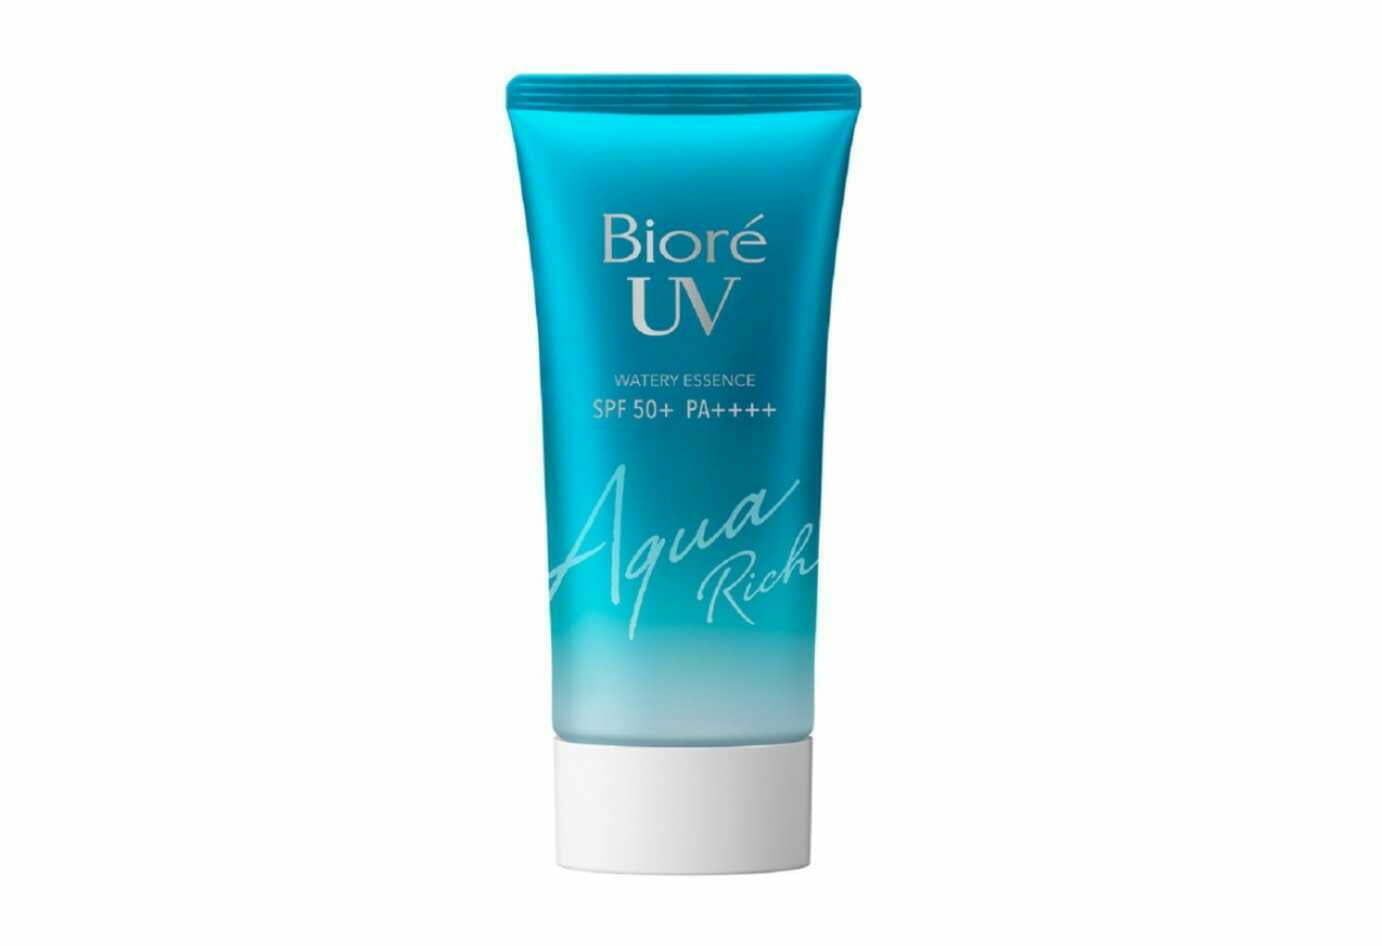 Biore UV Aqua Rich Watery Essence SPF 50+/PA+++